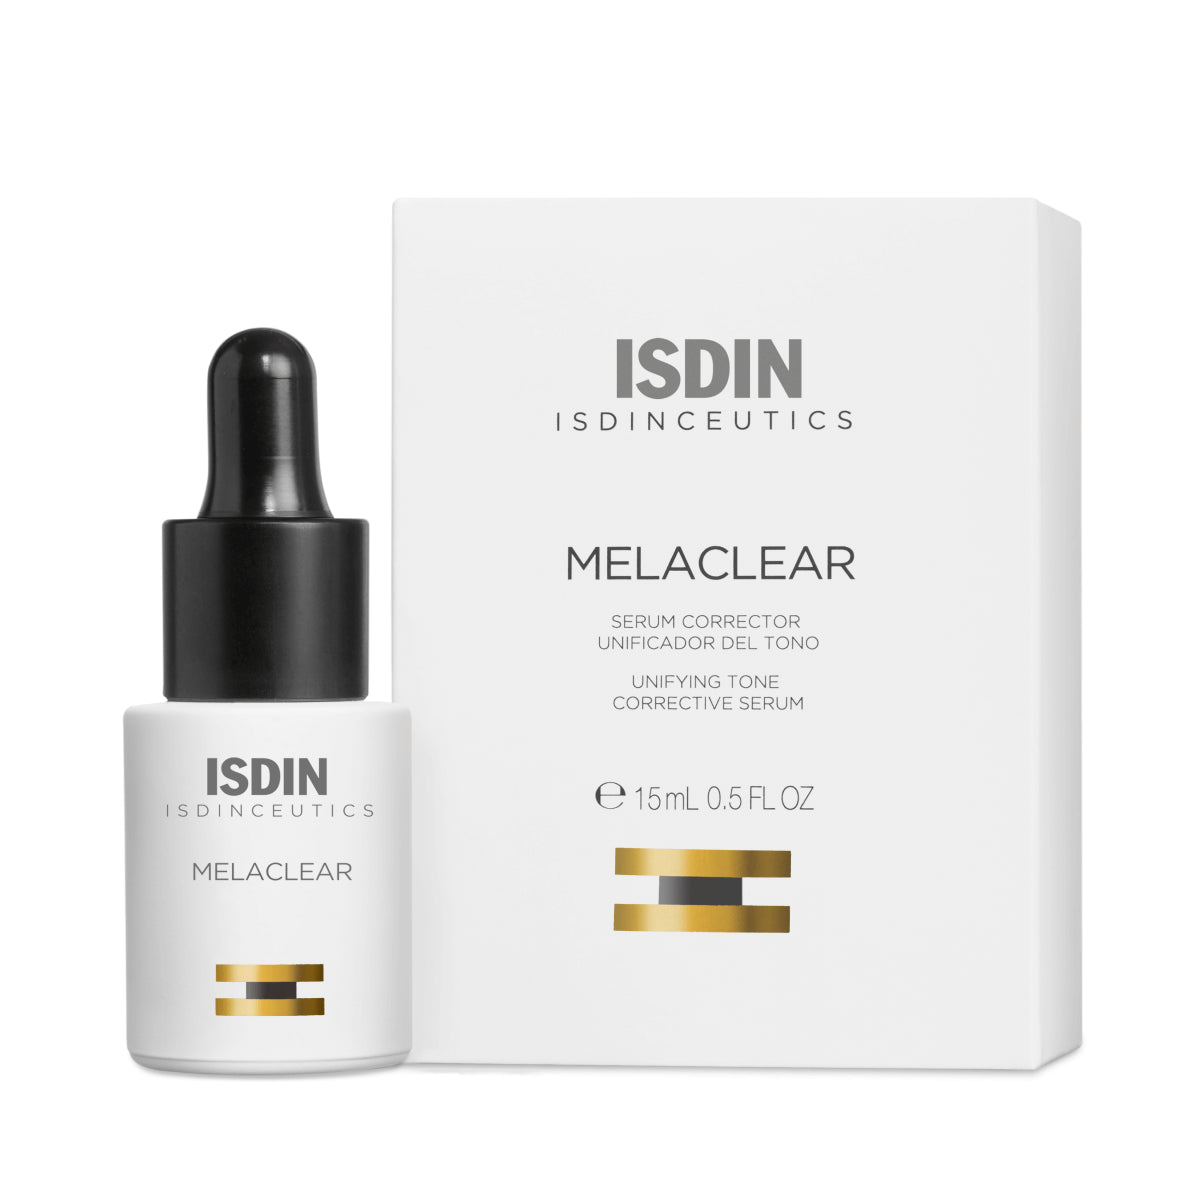 ISDIN Isdinceutics Melaclear